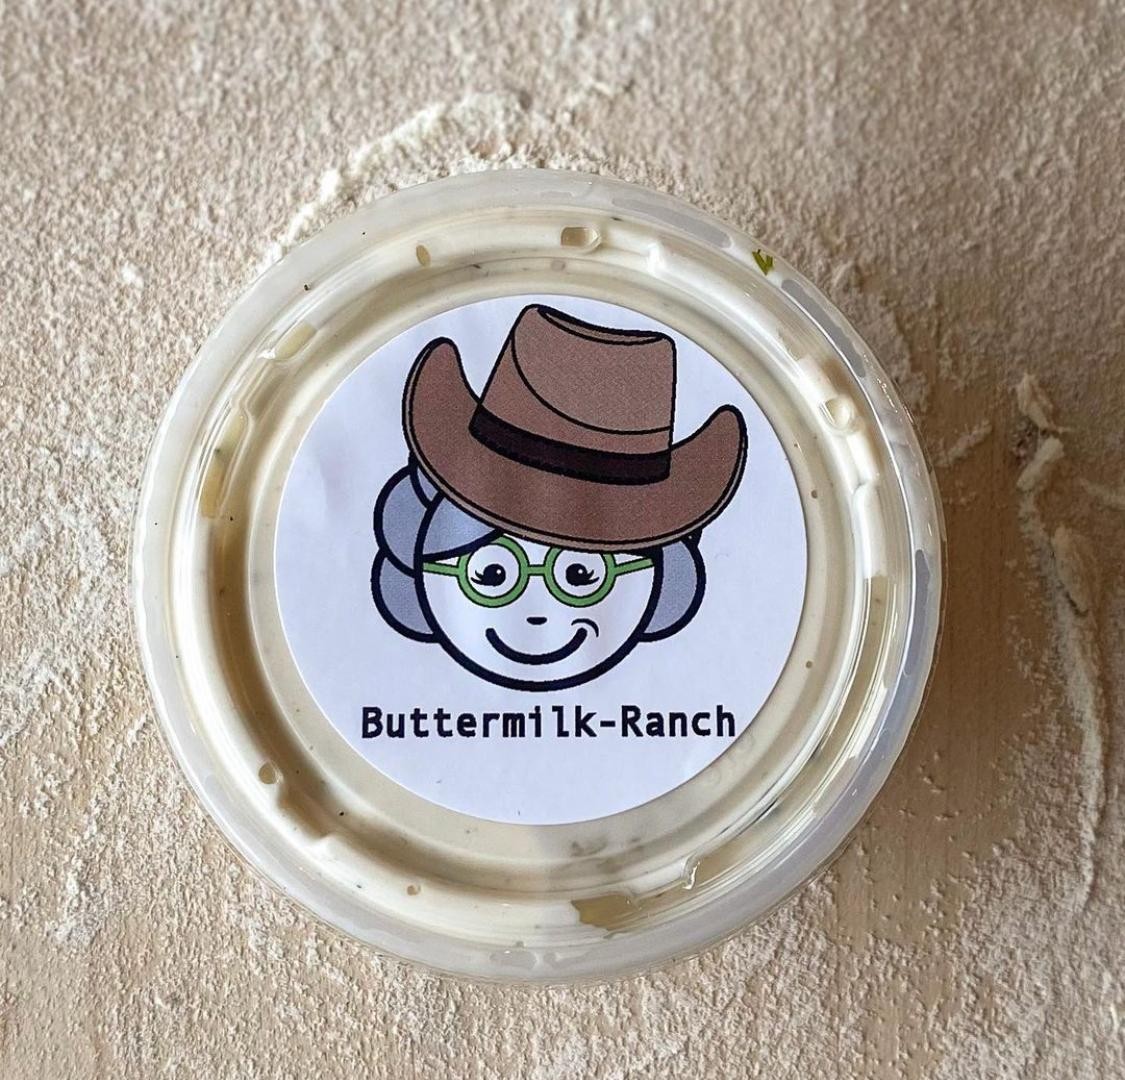 Buttermilk-Ranch